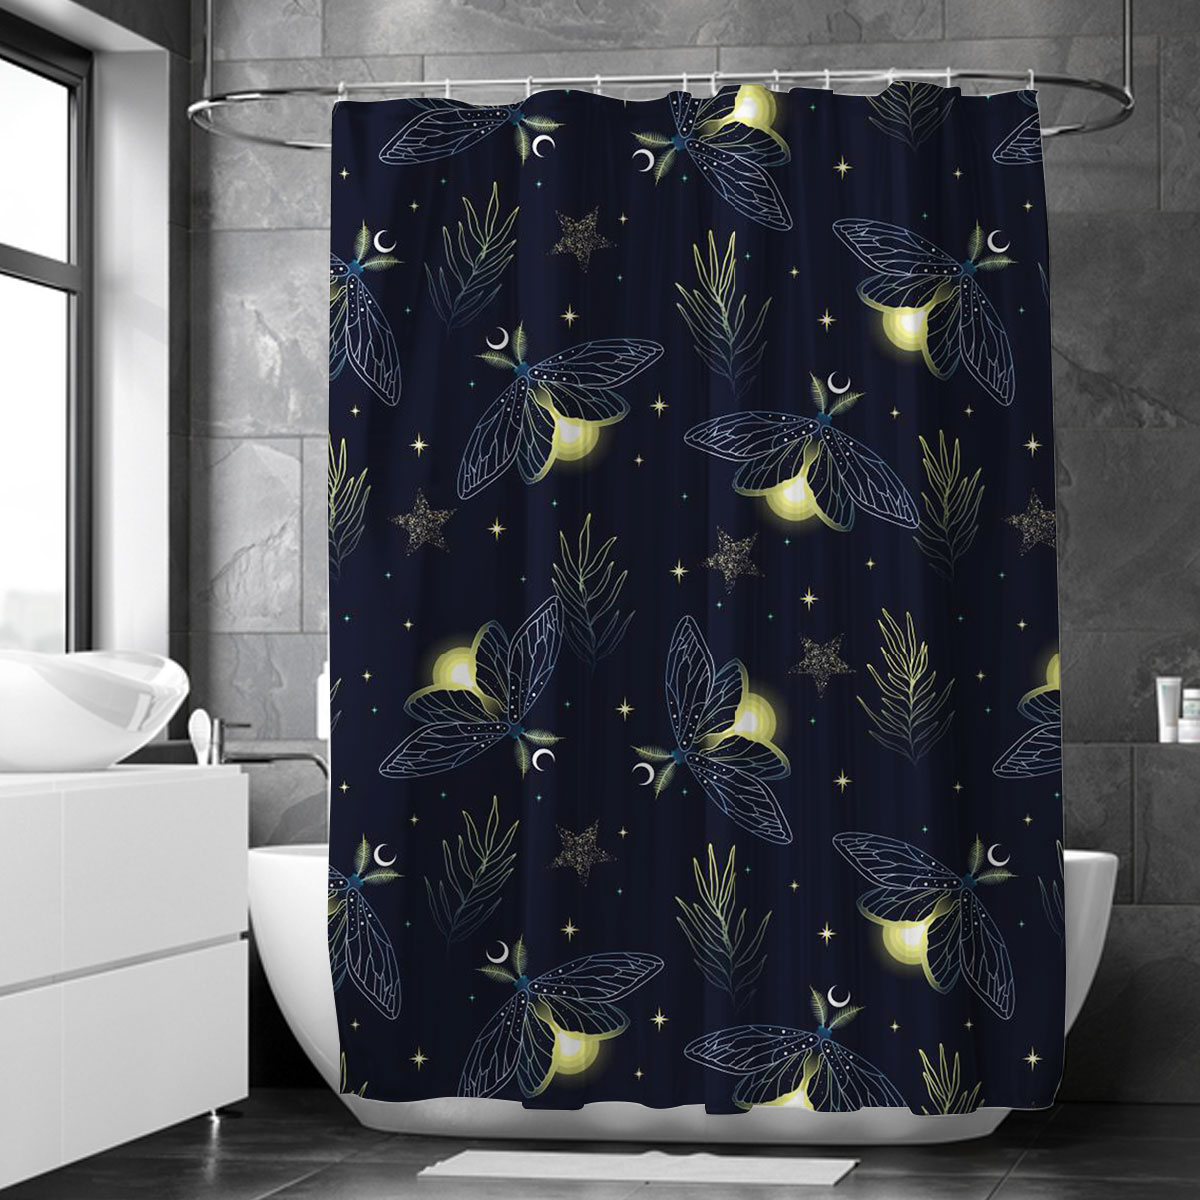 Dreamy Night Fireflies Shower Curtain